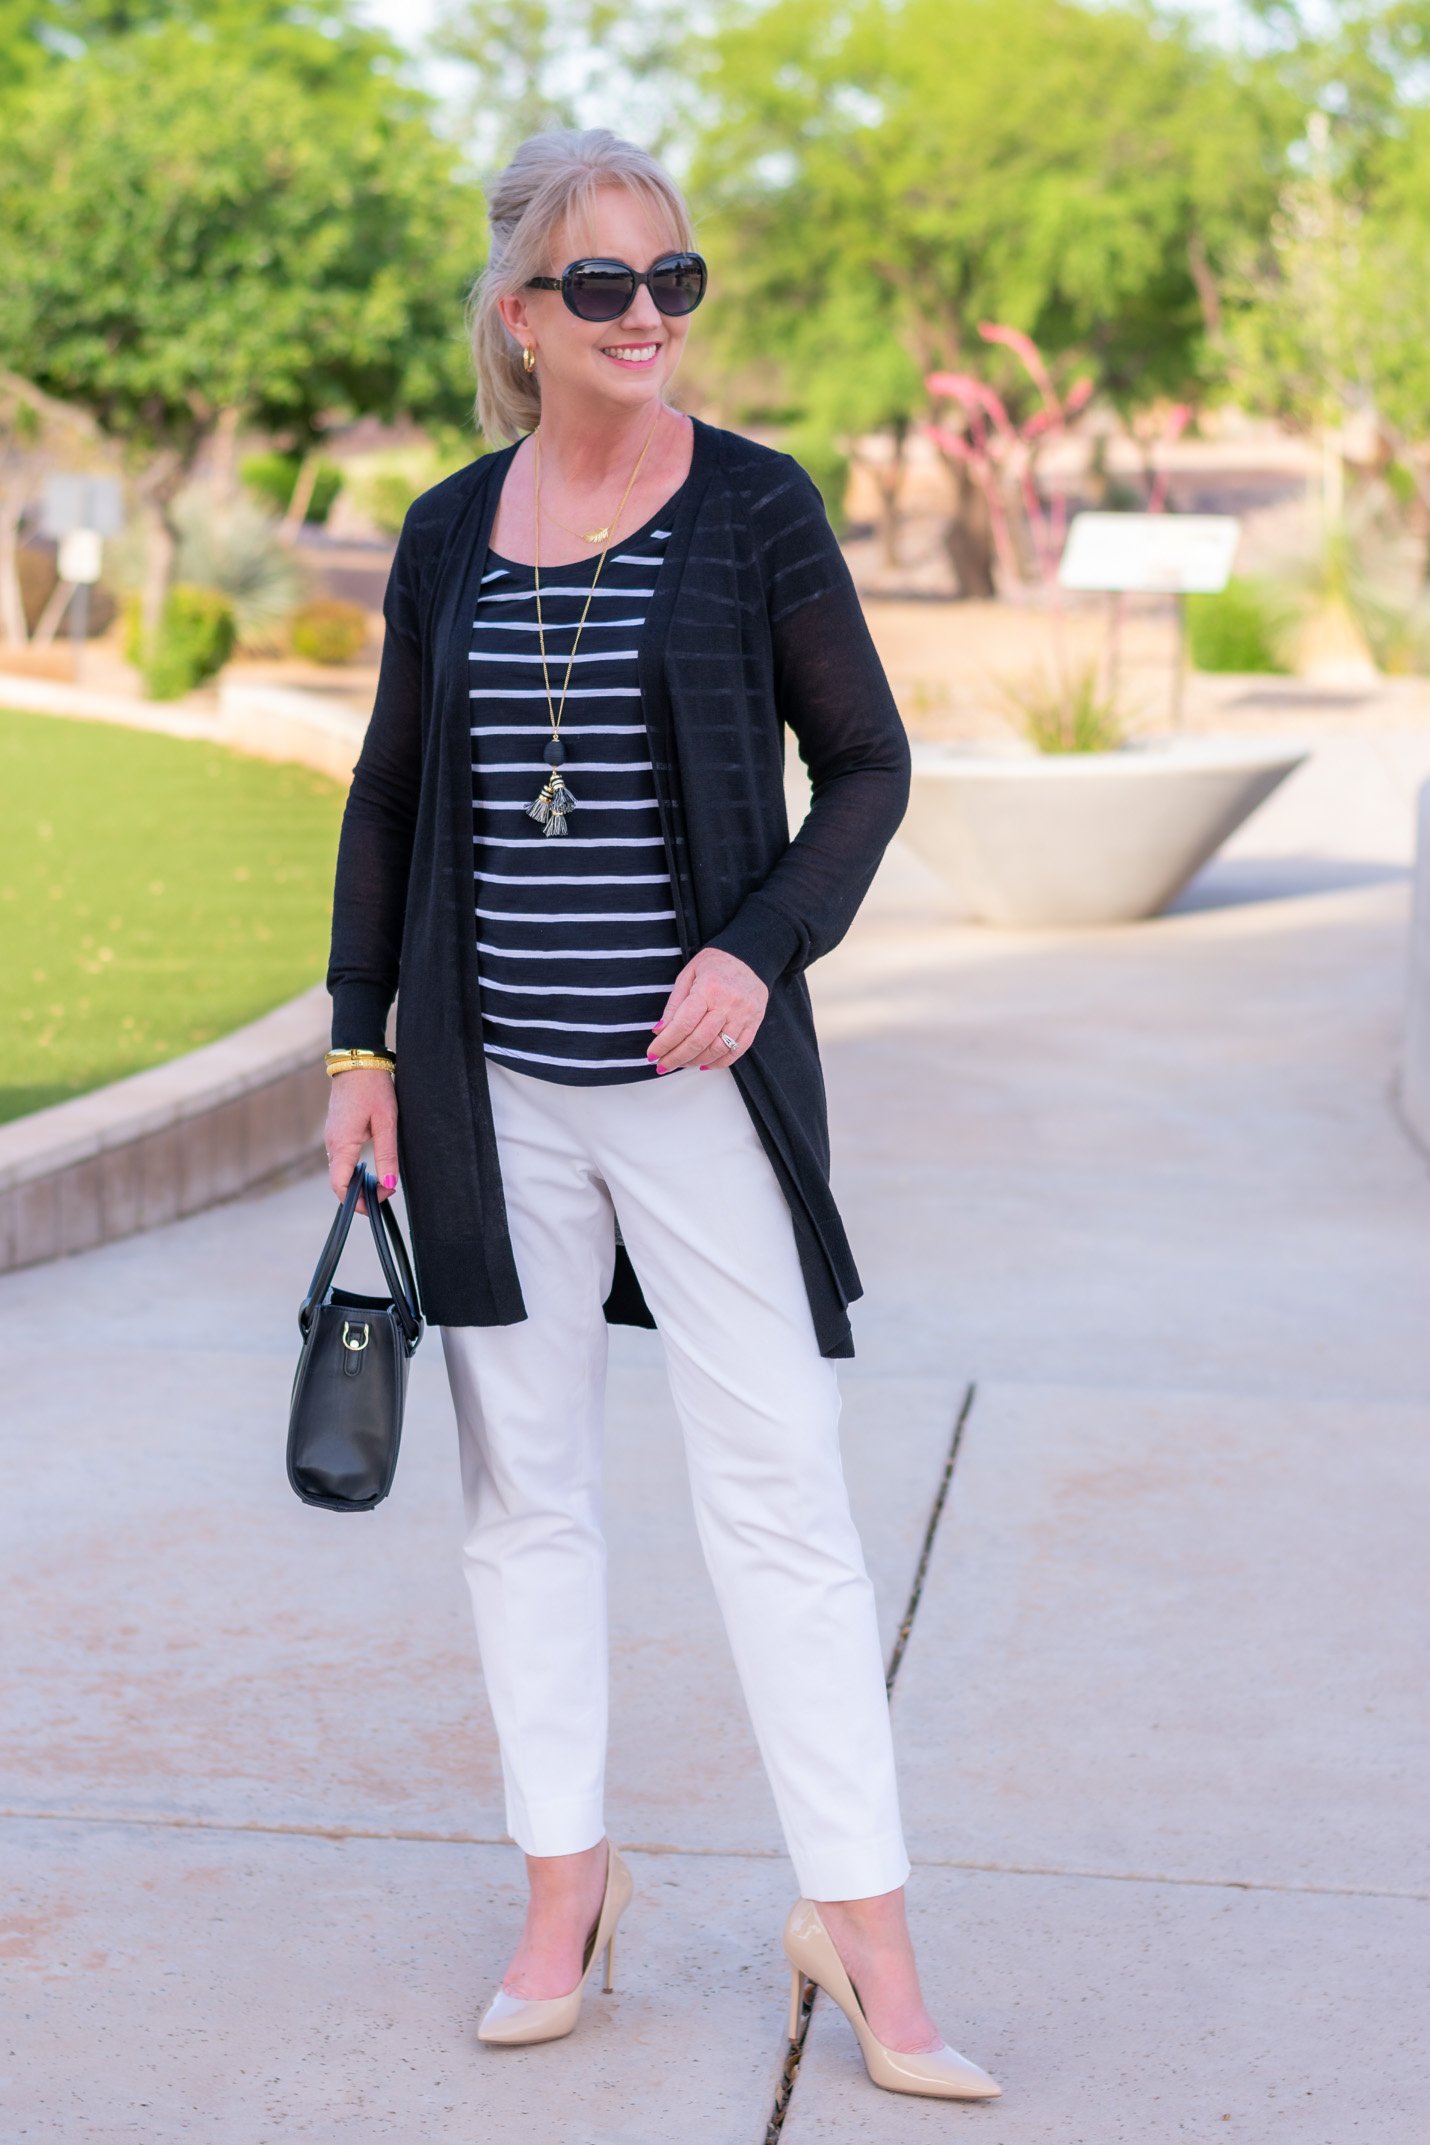 41 Stylish Ways To Wear Side-Stripe Pants - Styleoholic